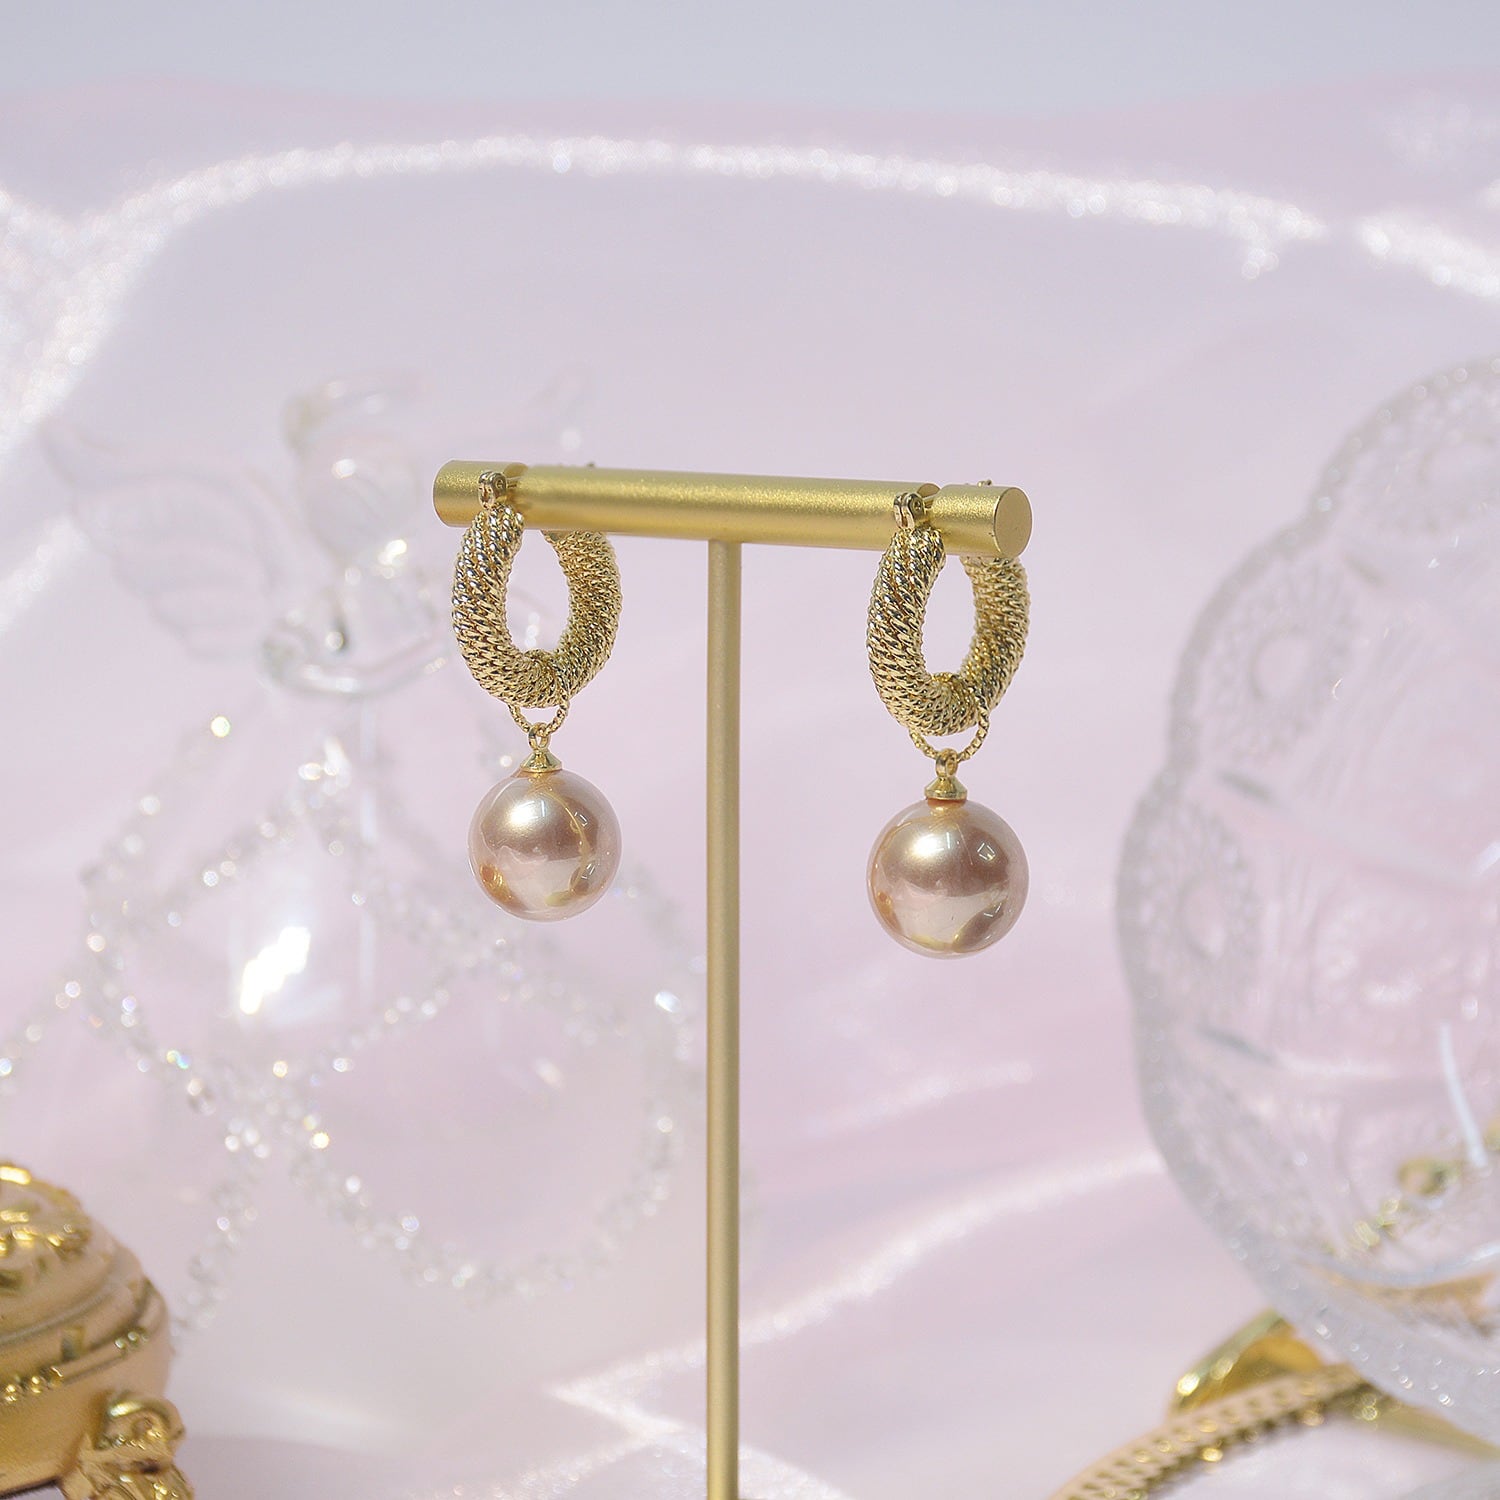 Cercei aurii, suflati cu aur 14k, cu perle, Githe C4